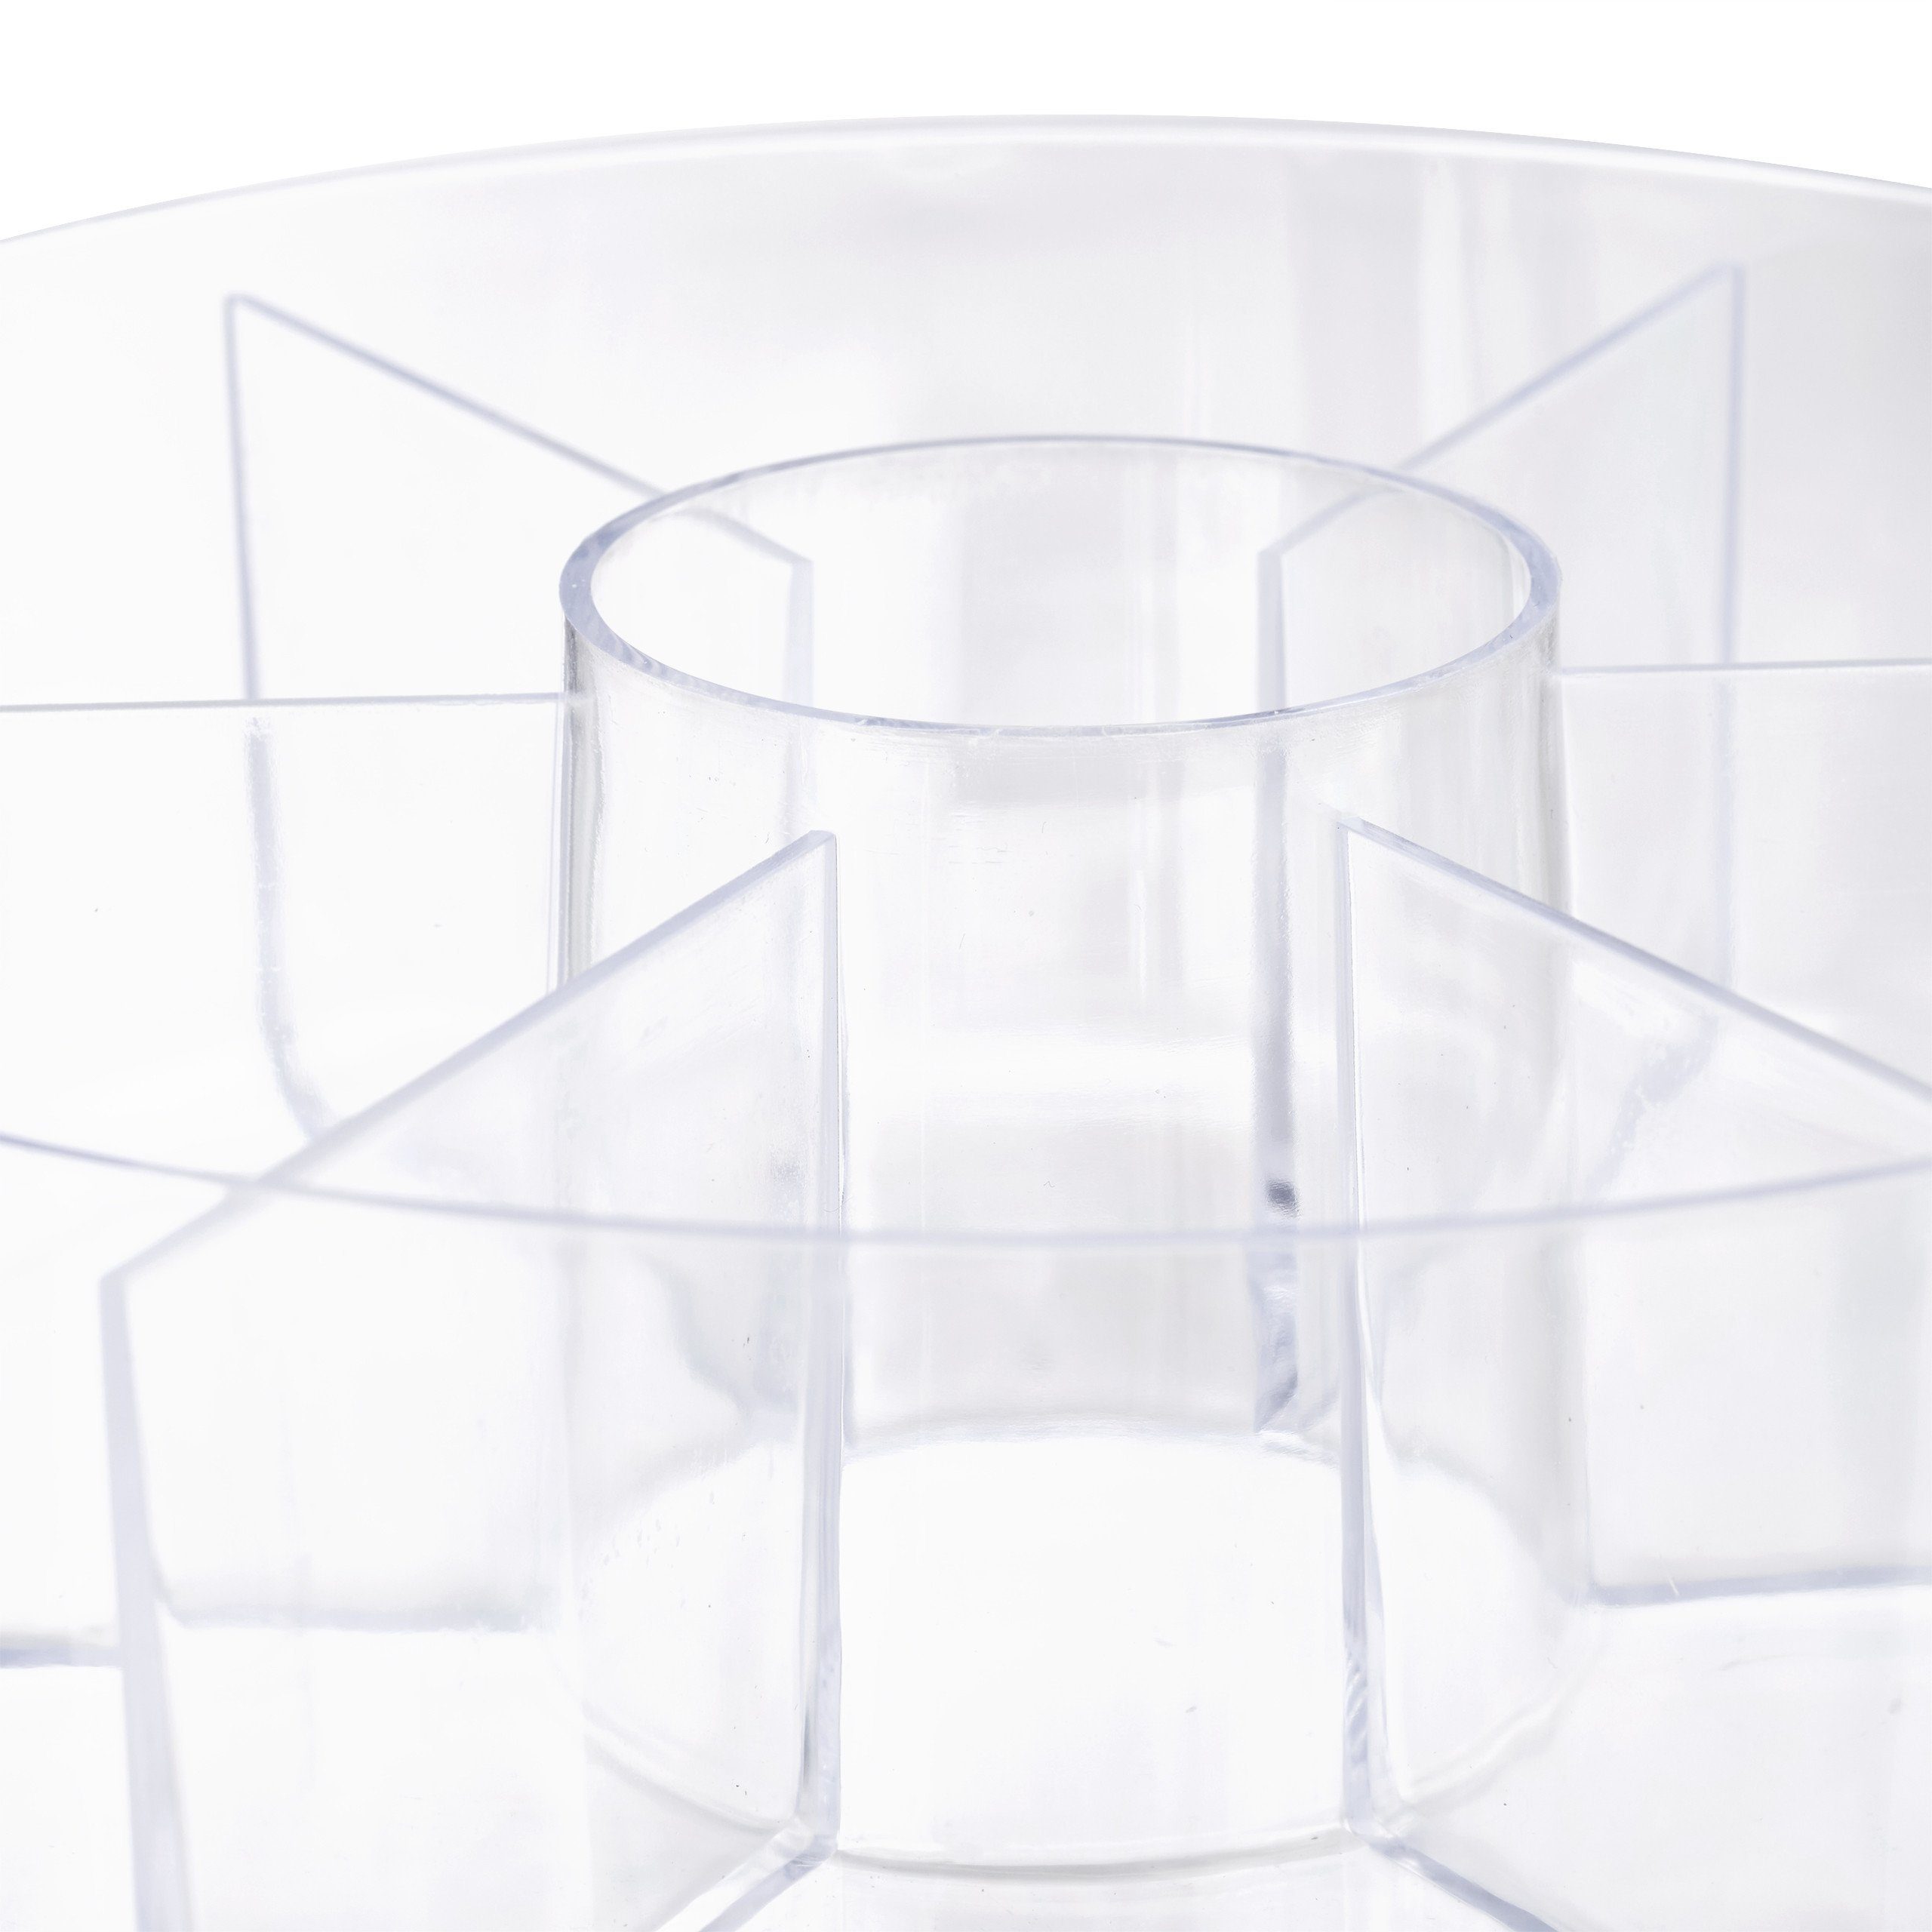 relaxdays Teebox 2 x Teebox Fächern, Kunststoff transparent mit 6